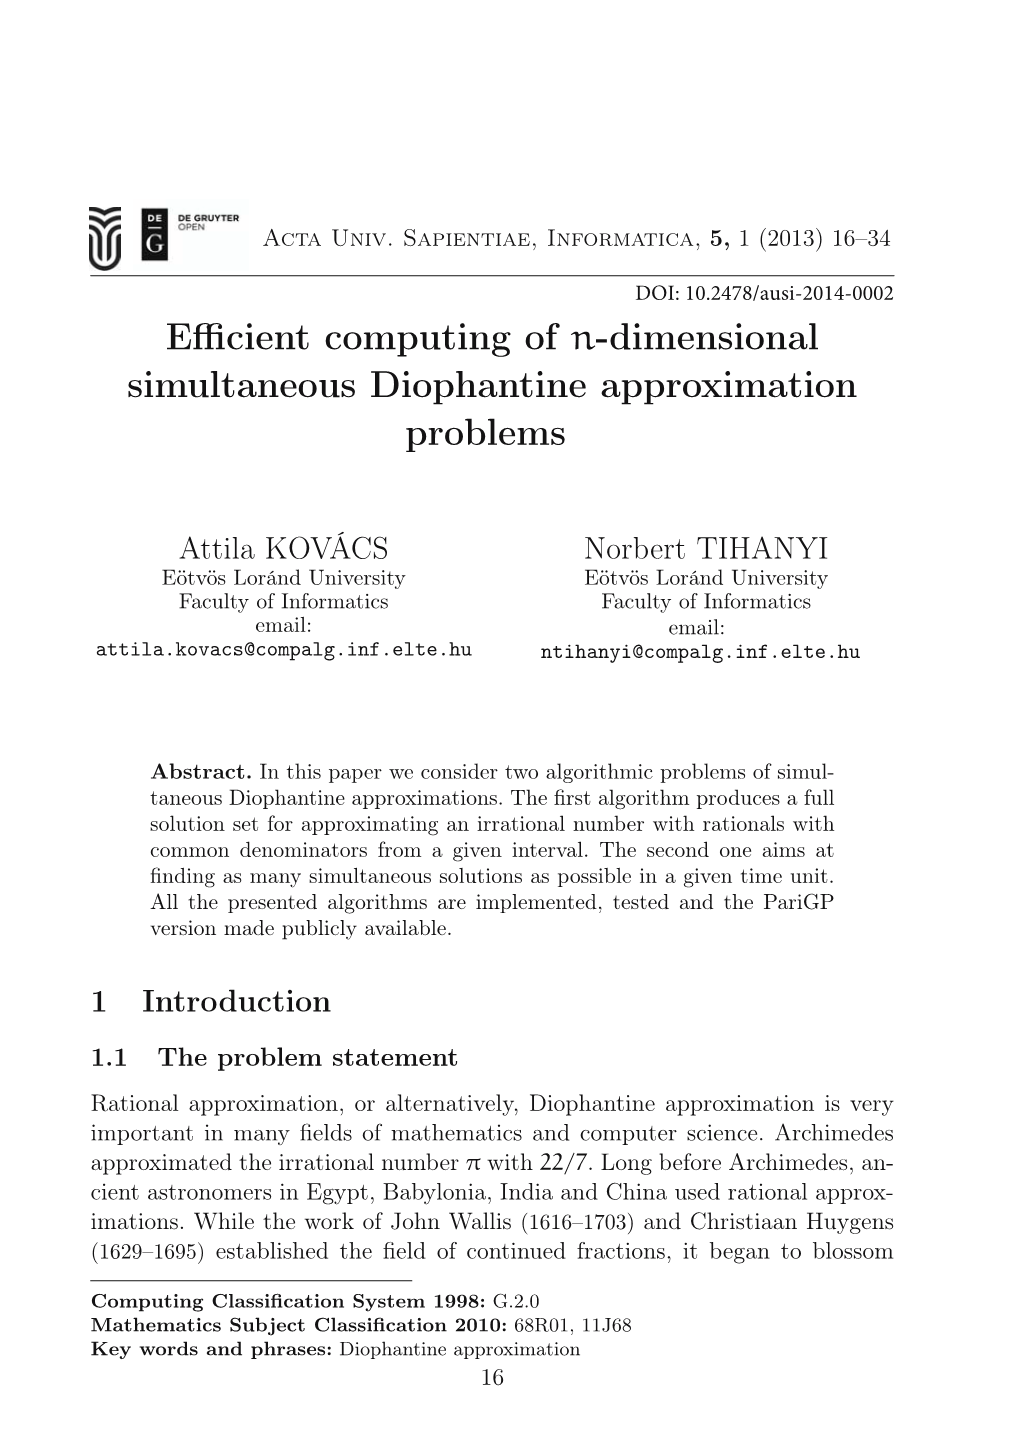 Efficient Computing of N-Dimensional Simultaneous Diophantine